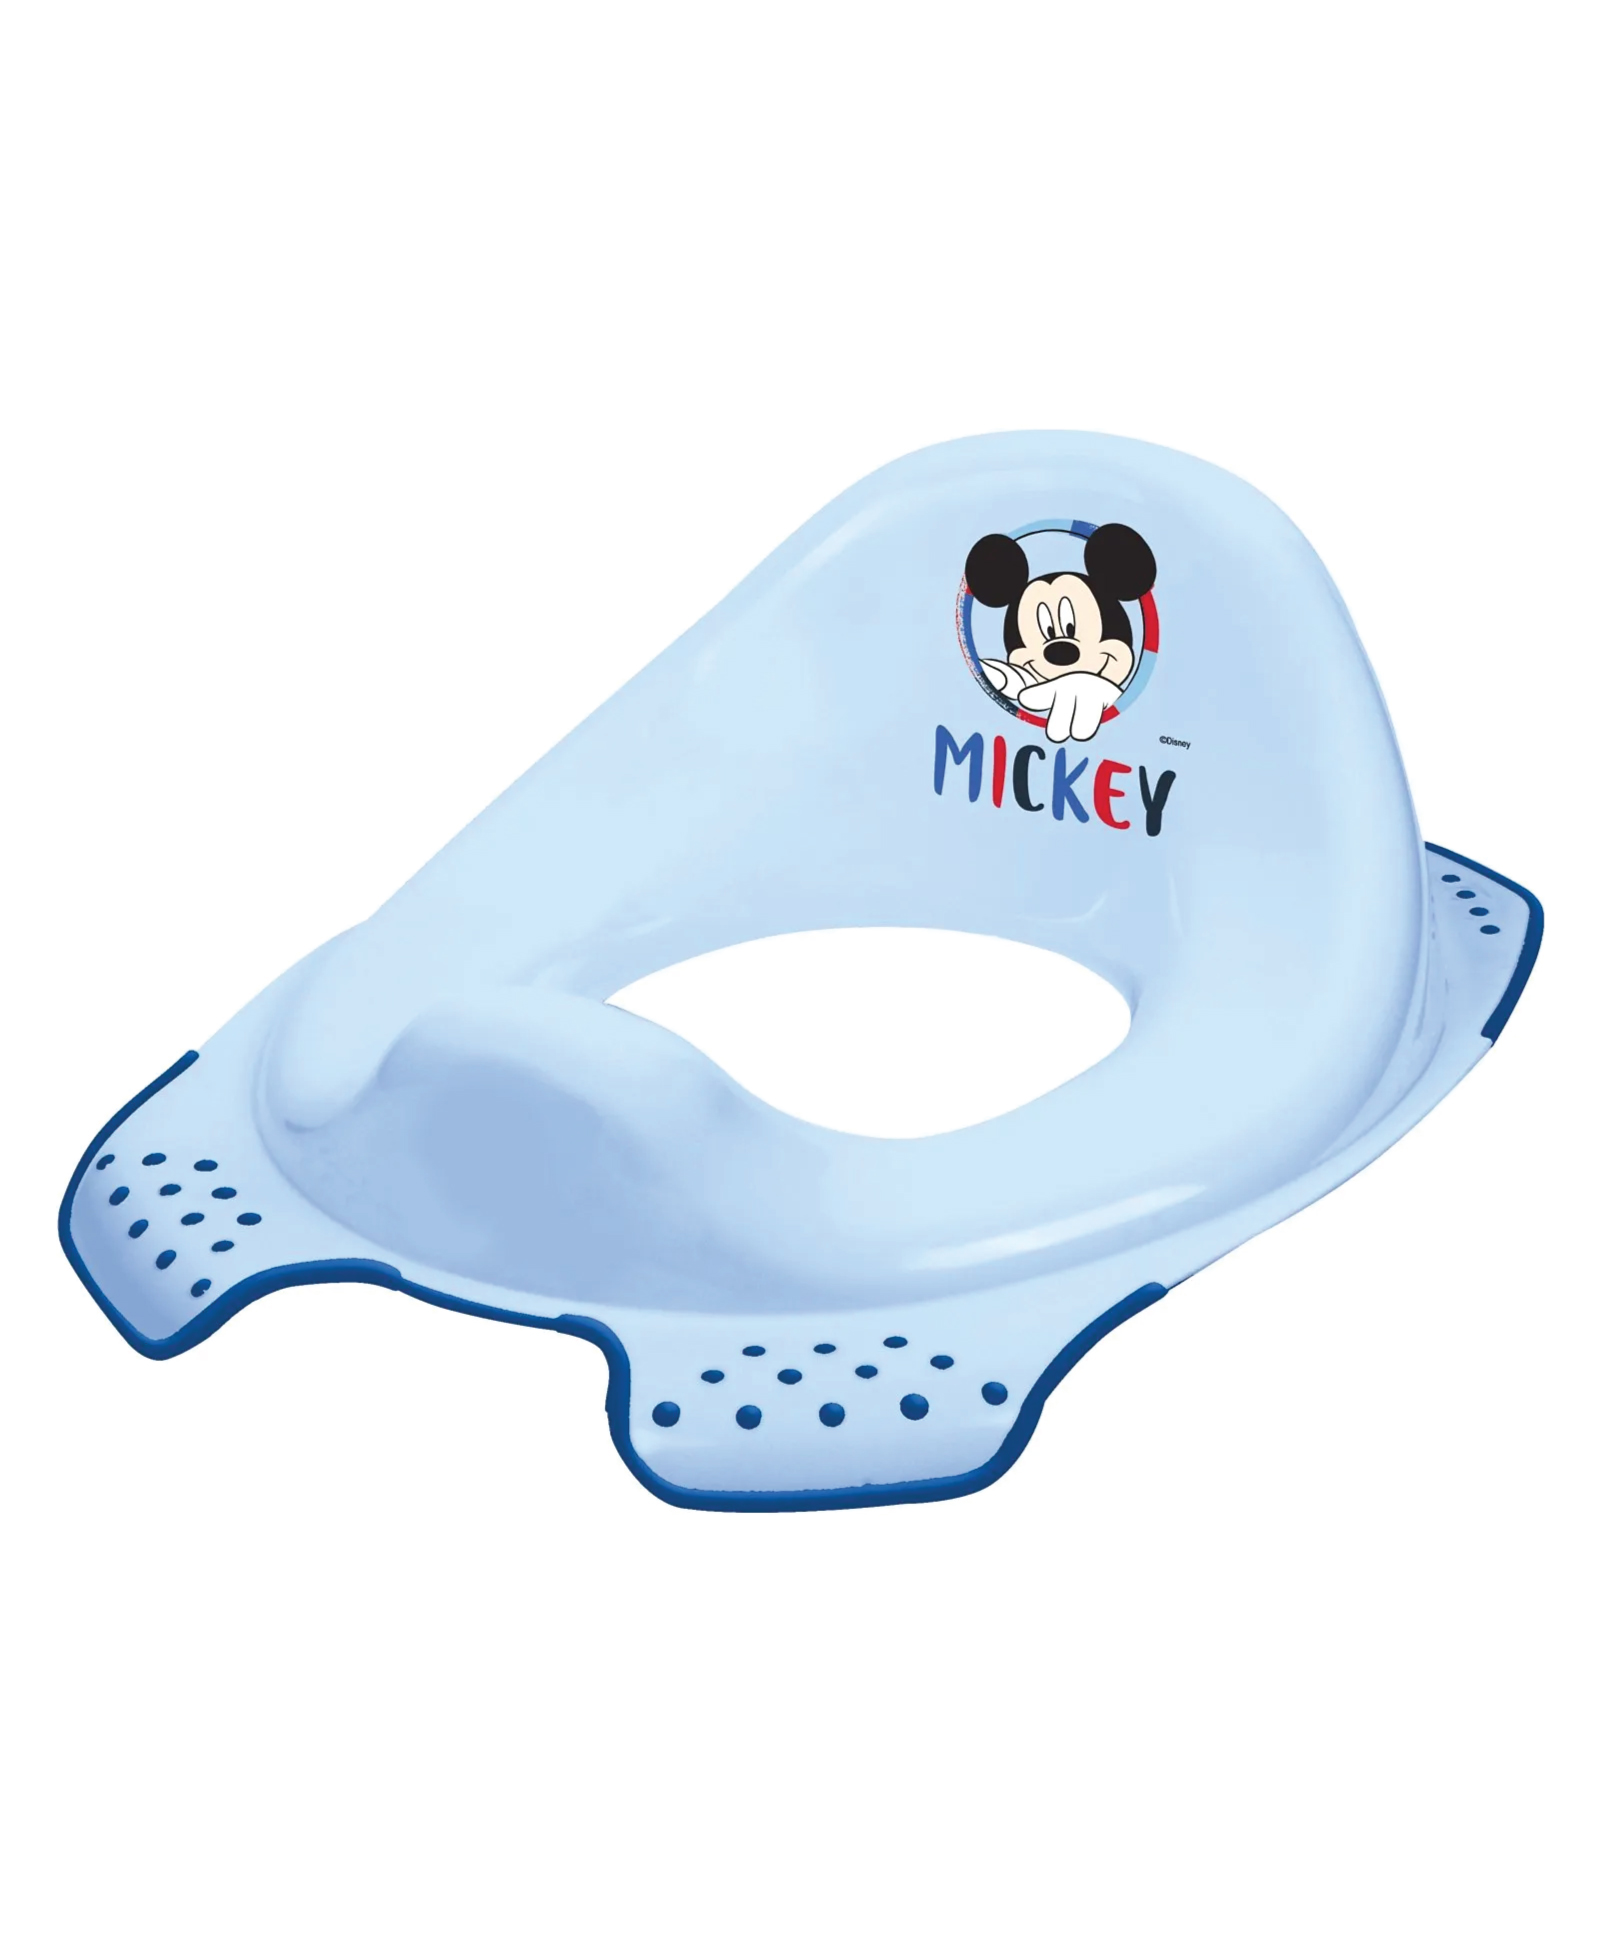 Toilet Seat With Anti-Slip Function Mickey